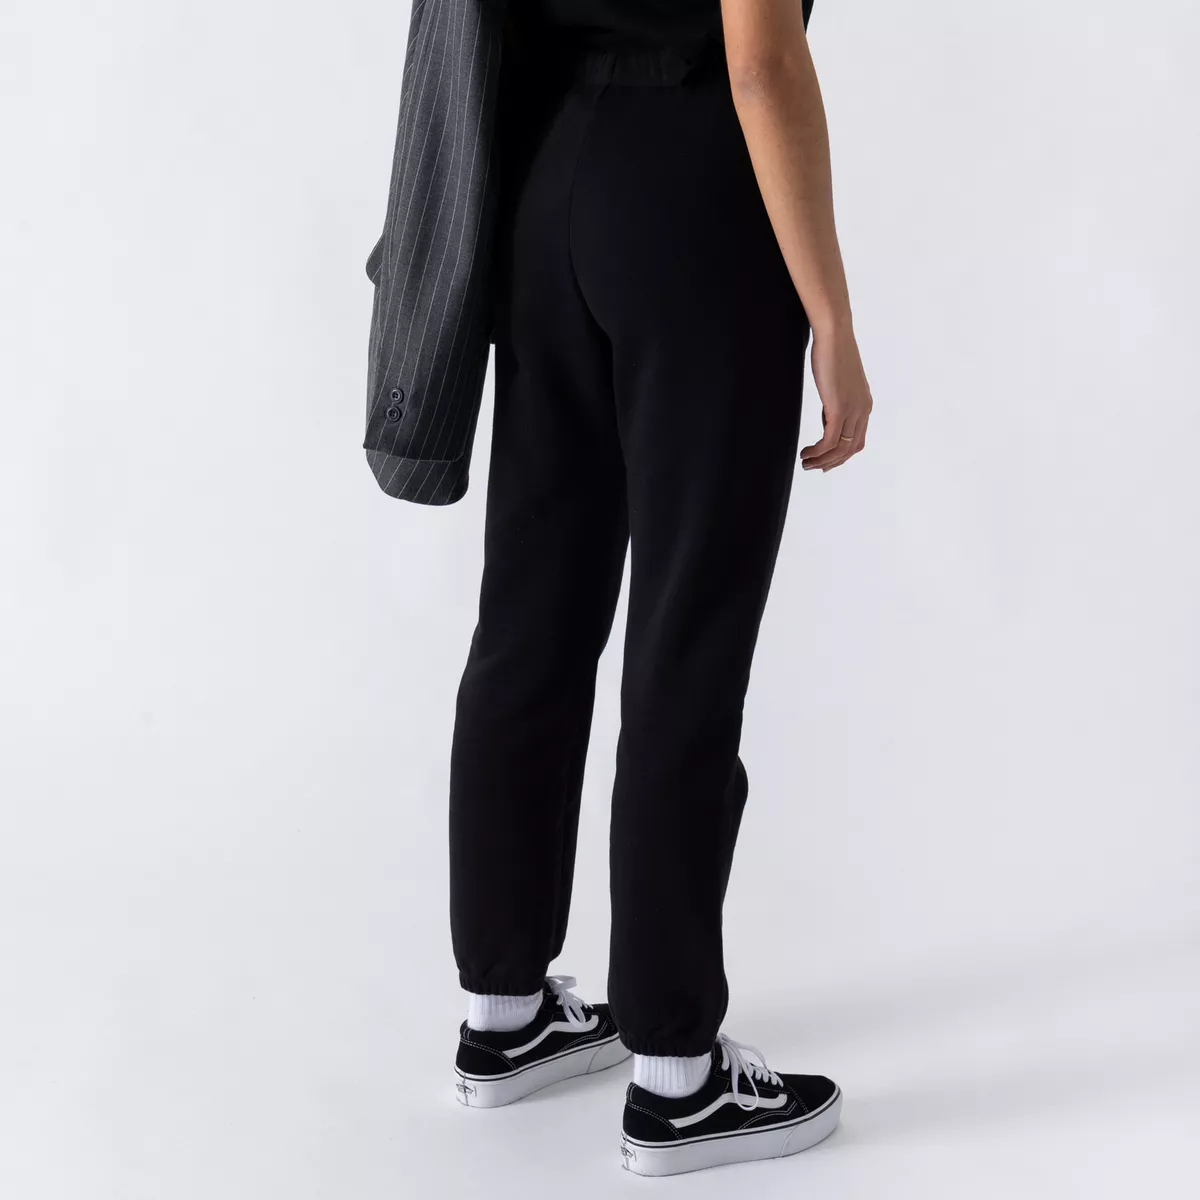 Champion Elastic Cuff Pants Women's Black Sportswear Sweatpants Athletic  Bootms | eBay